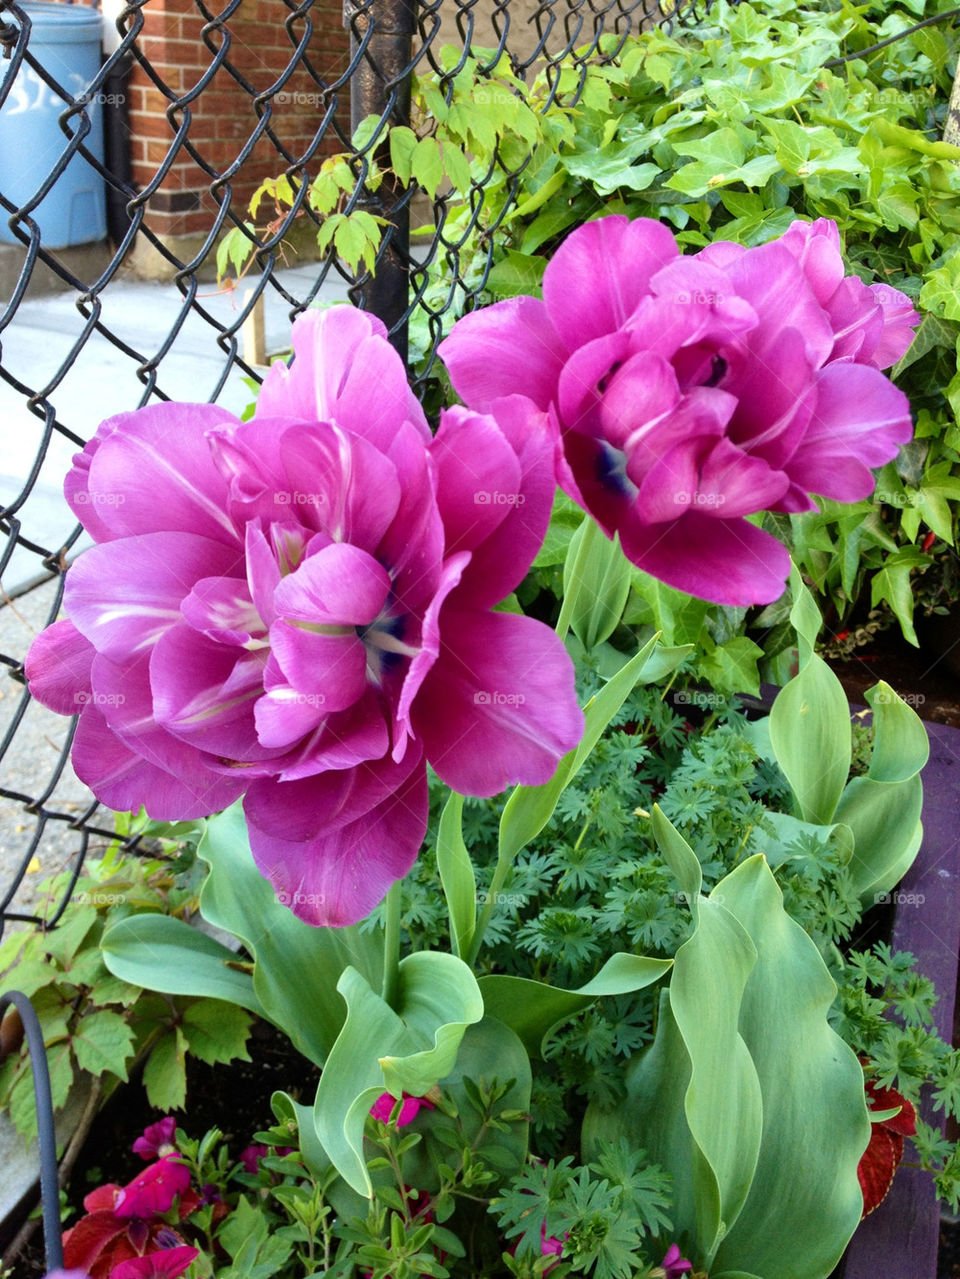 Evav,tulips in my garden